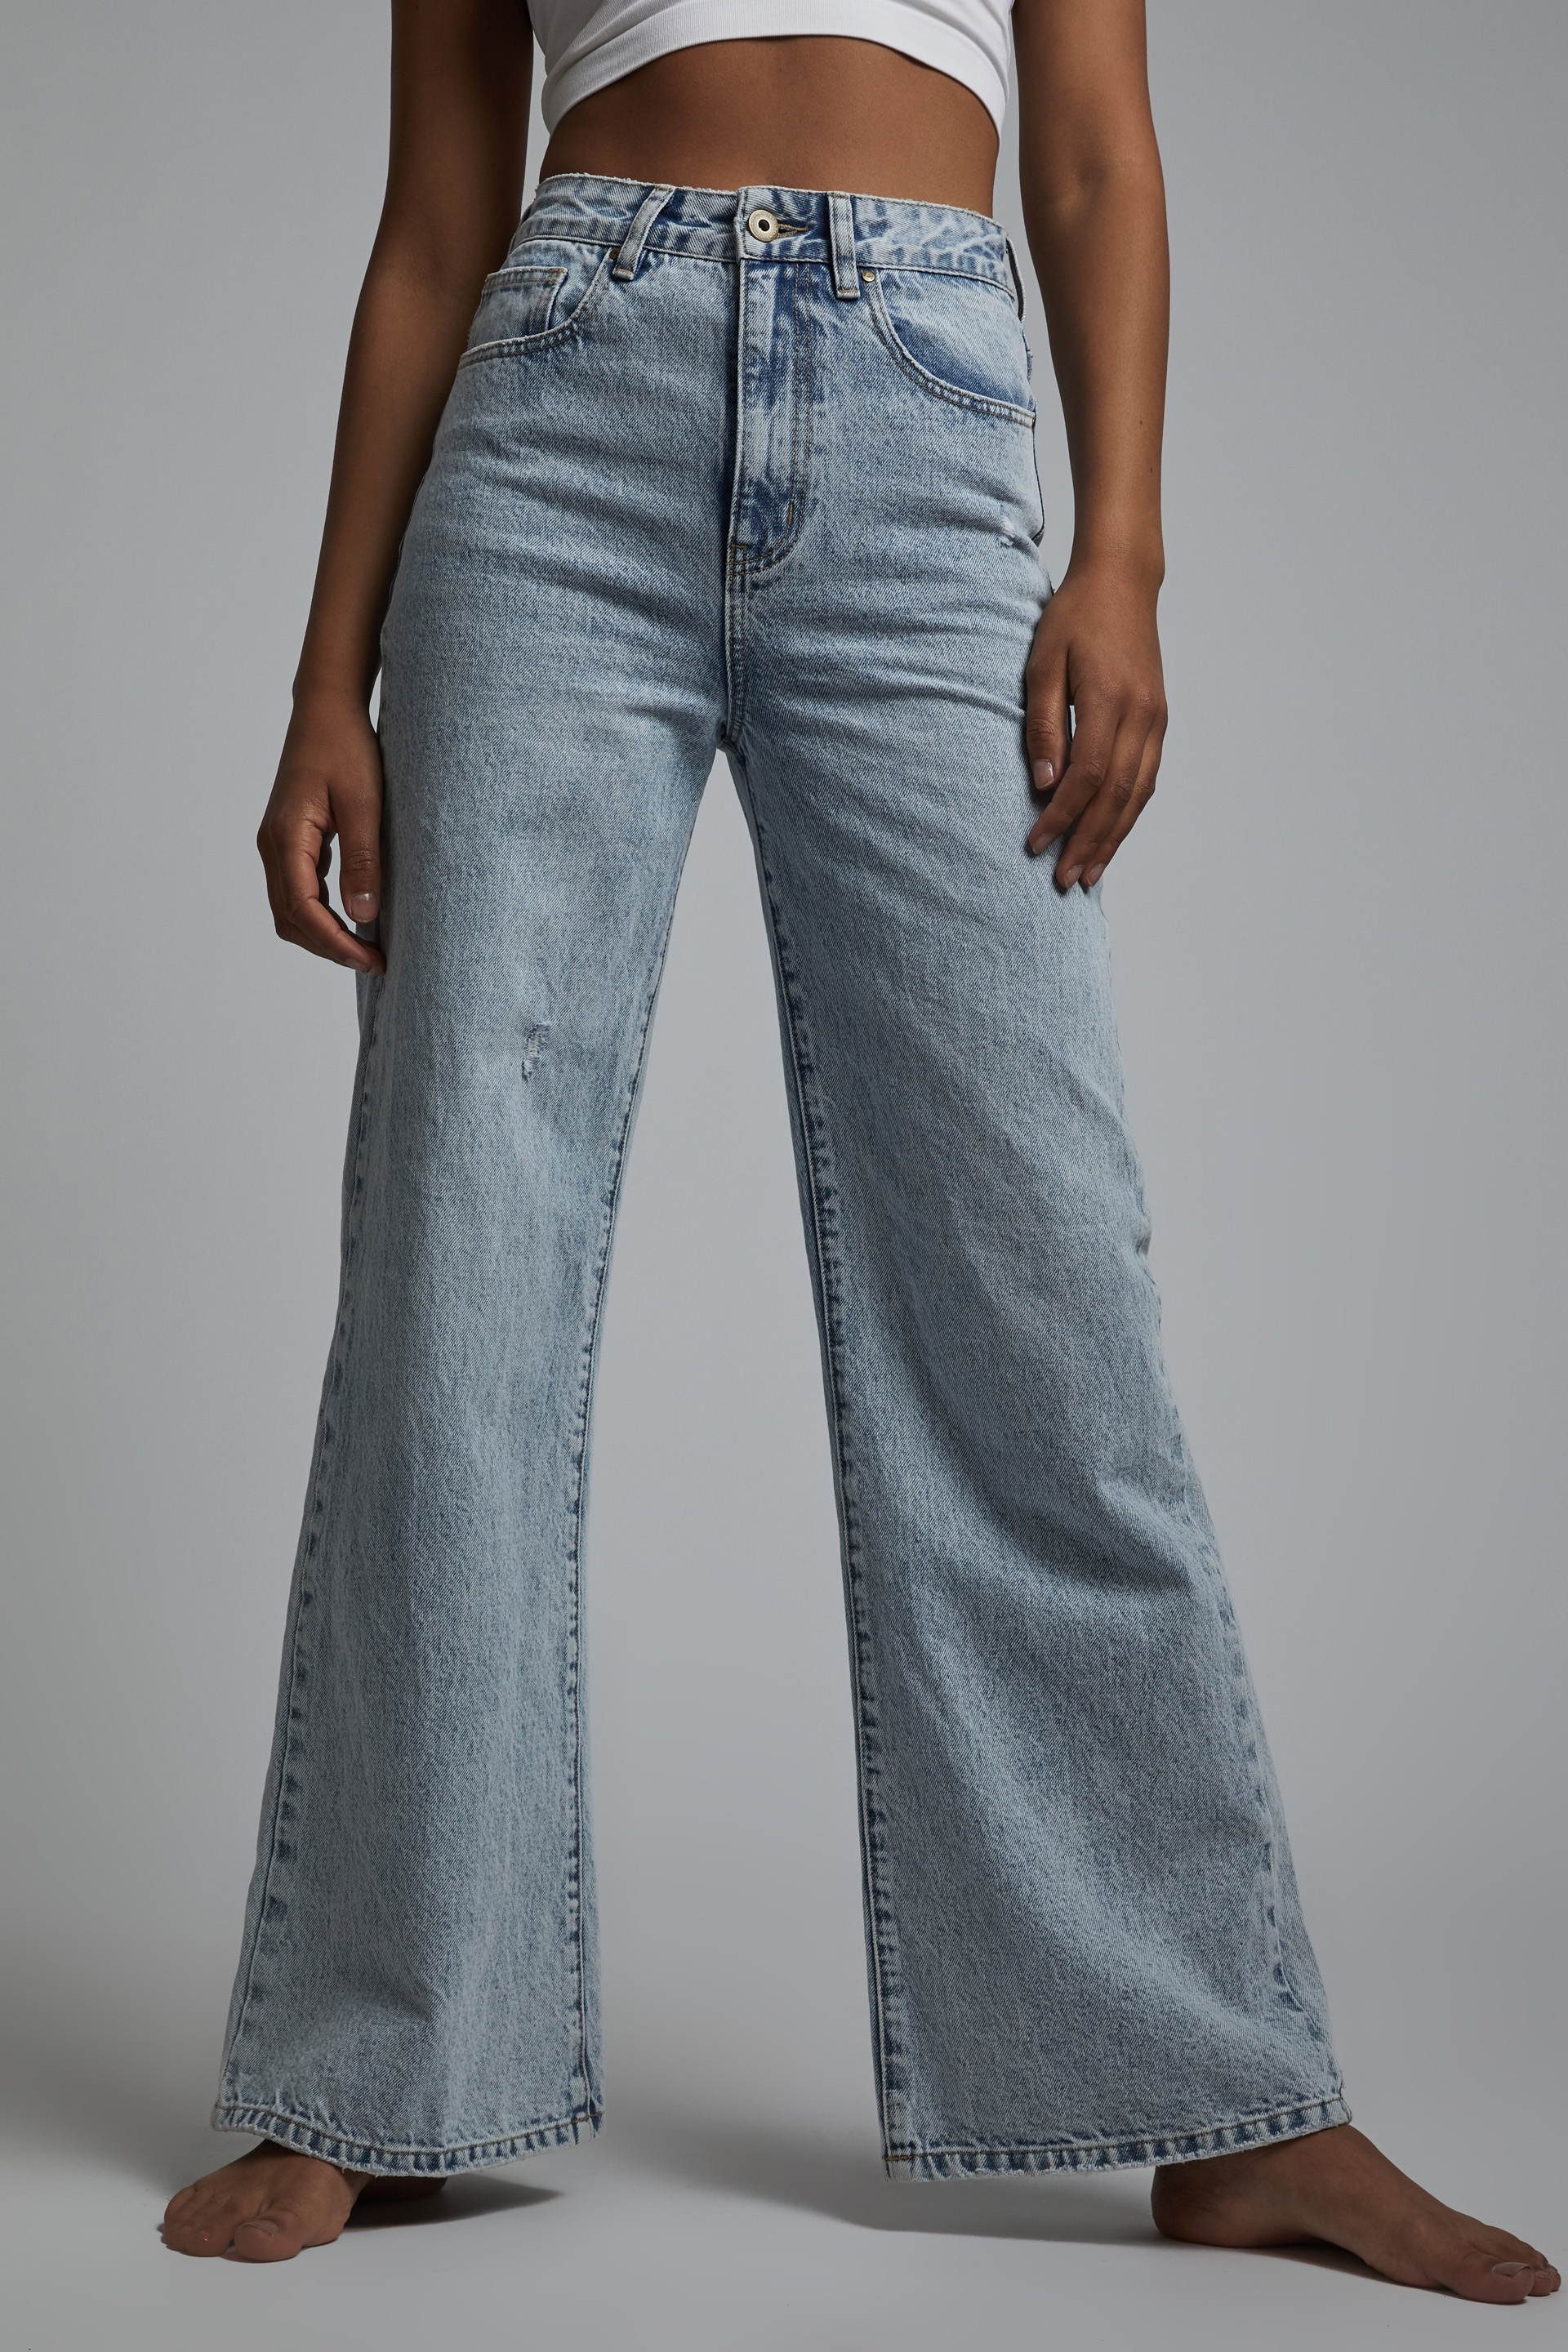 cotton on wide leg jeans